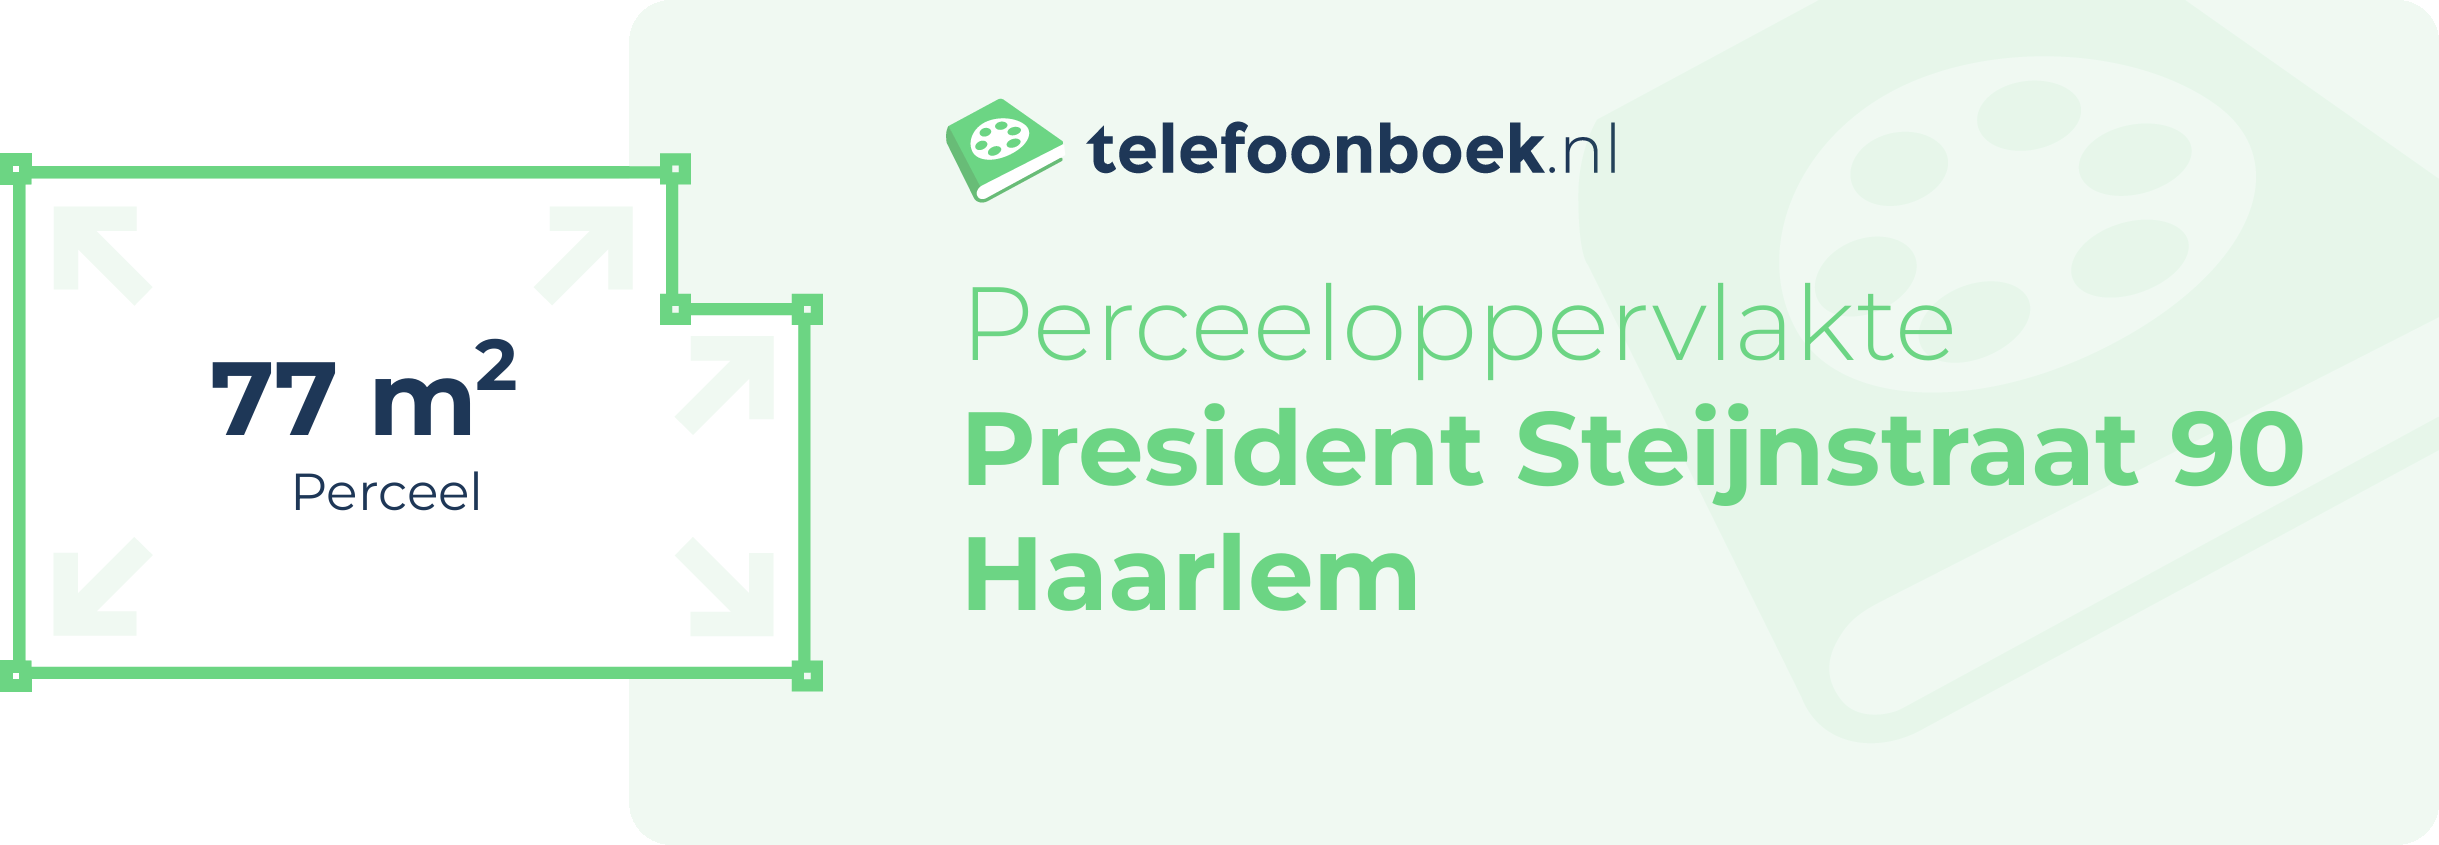 Perceeloppervlakte President Steijnstraat 90 Haarlem